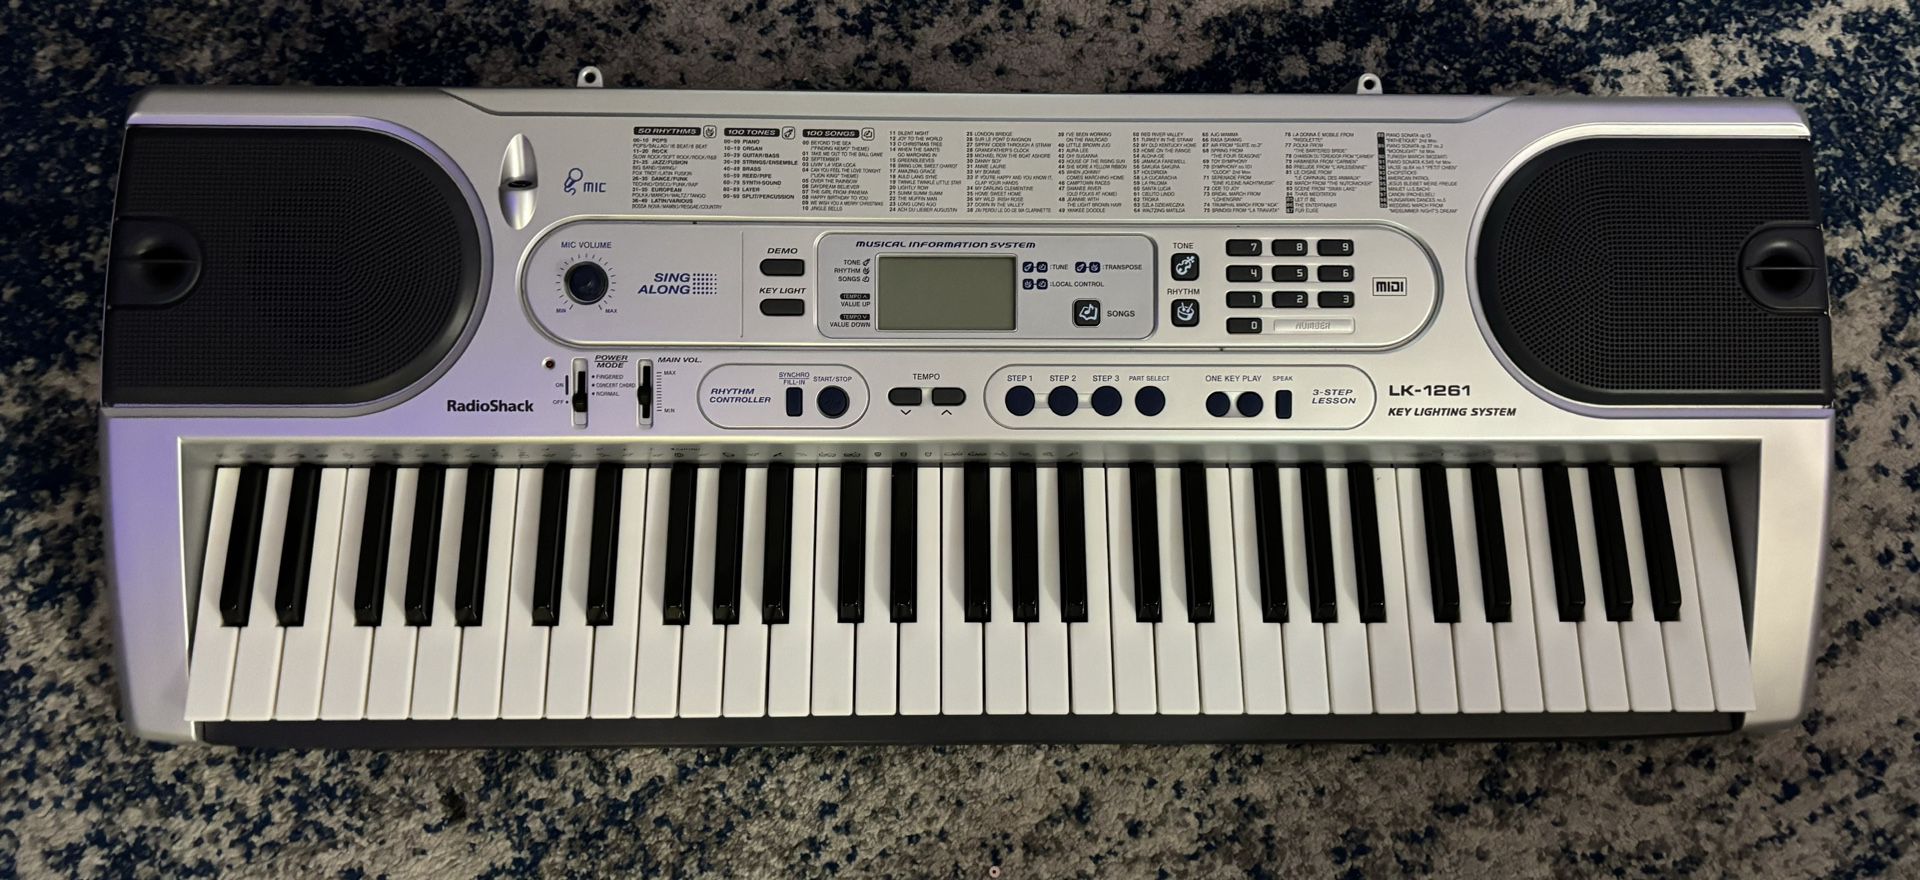 RadioShack MIDI 61 Key Musical Keyboard